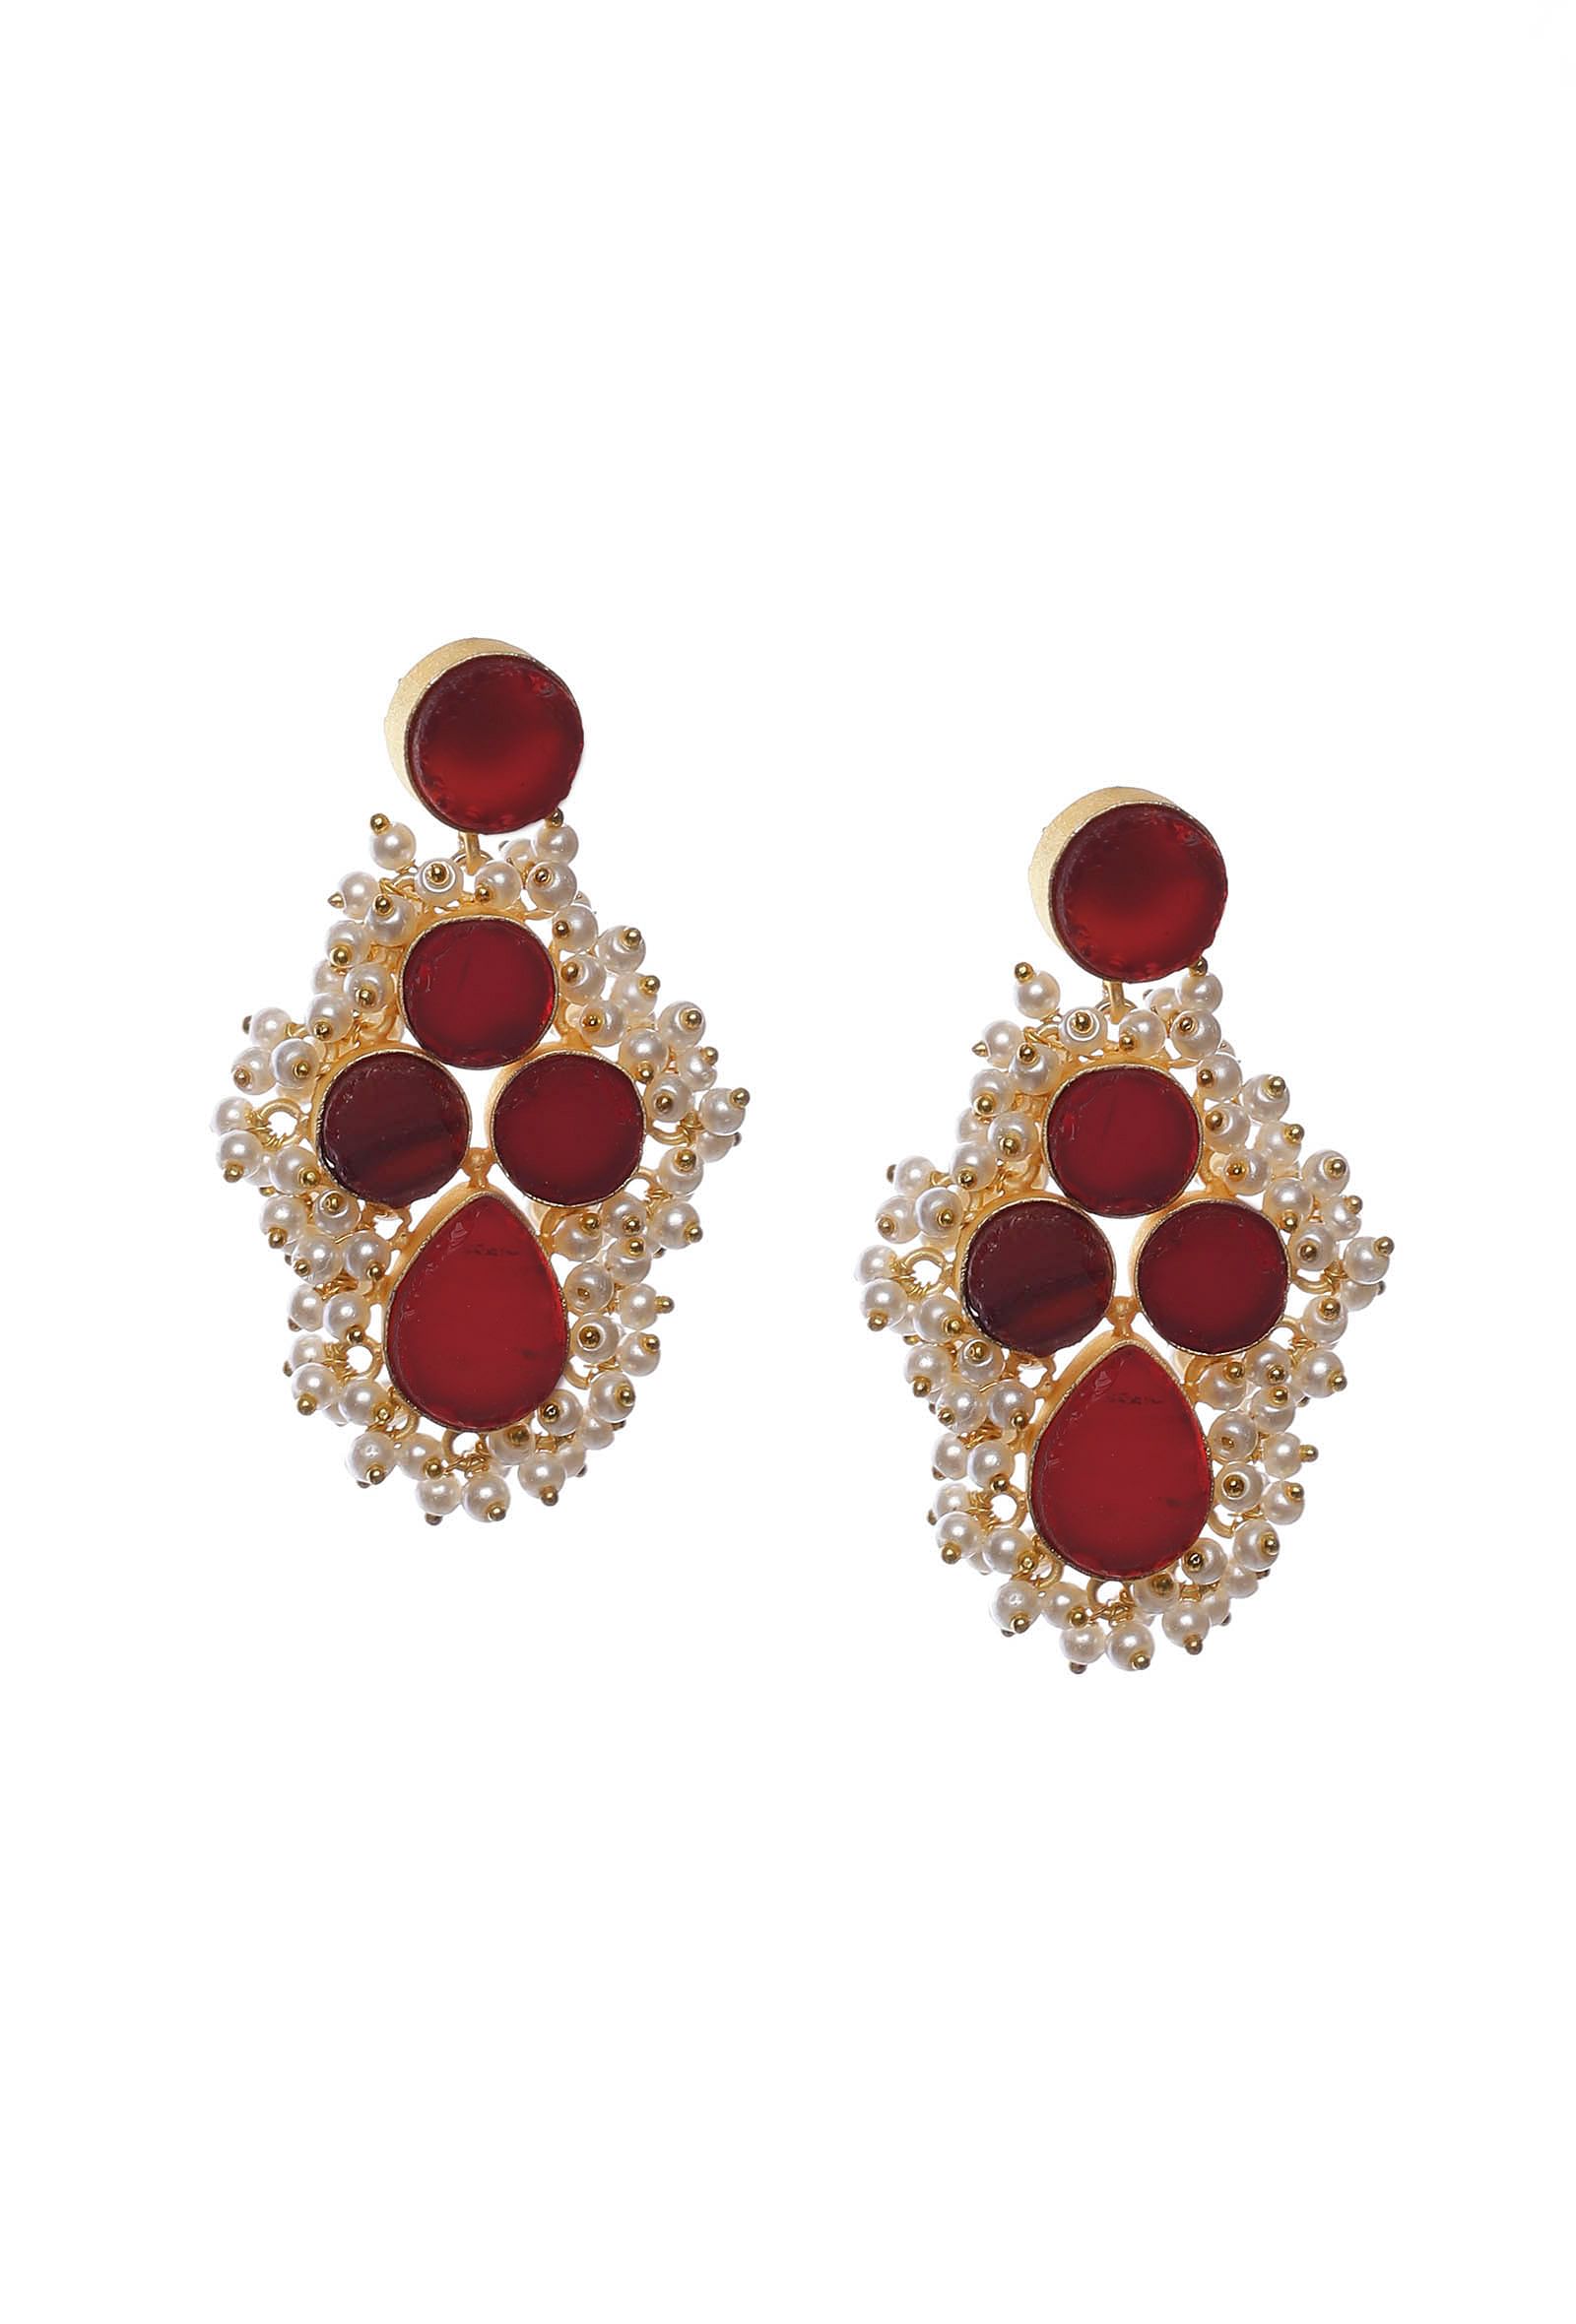 Buy Sophisticated Red Stone Rose Gold Earrings Online | ORRA